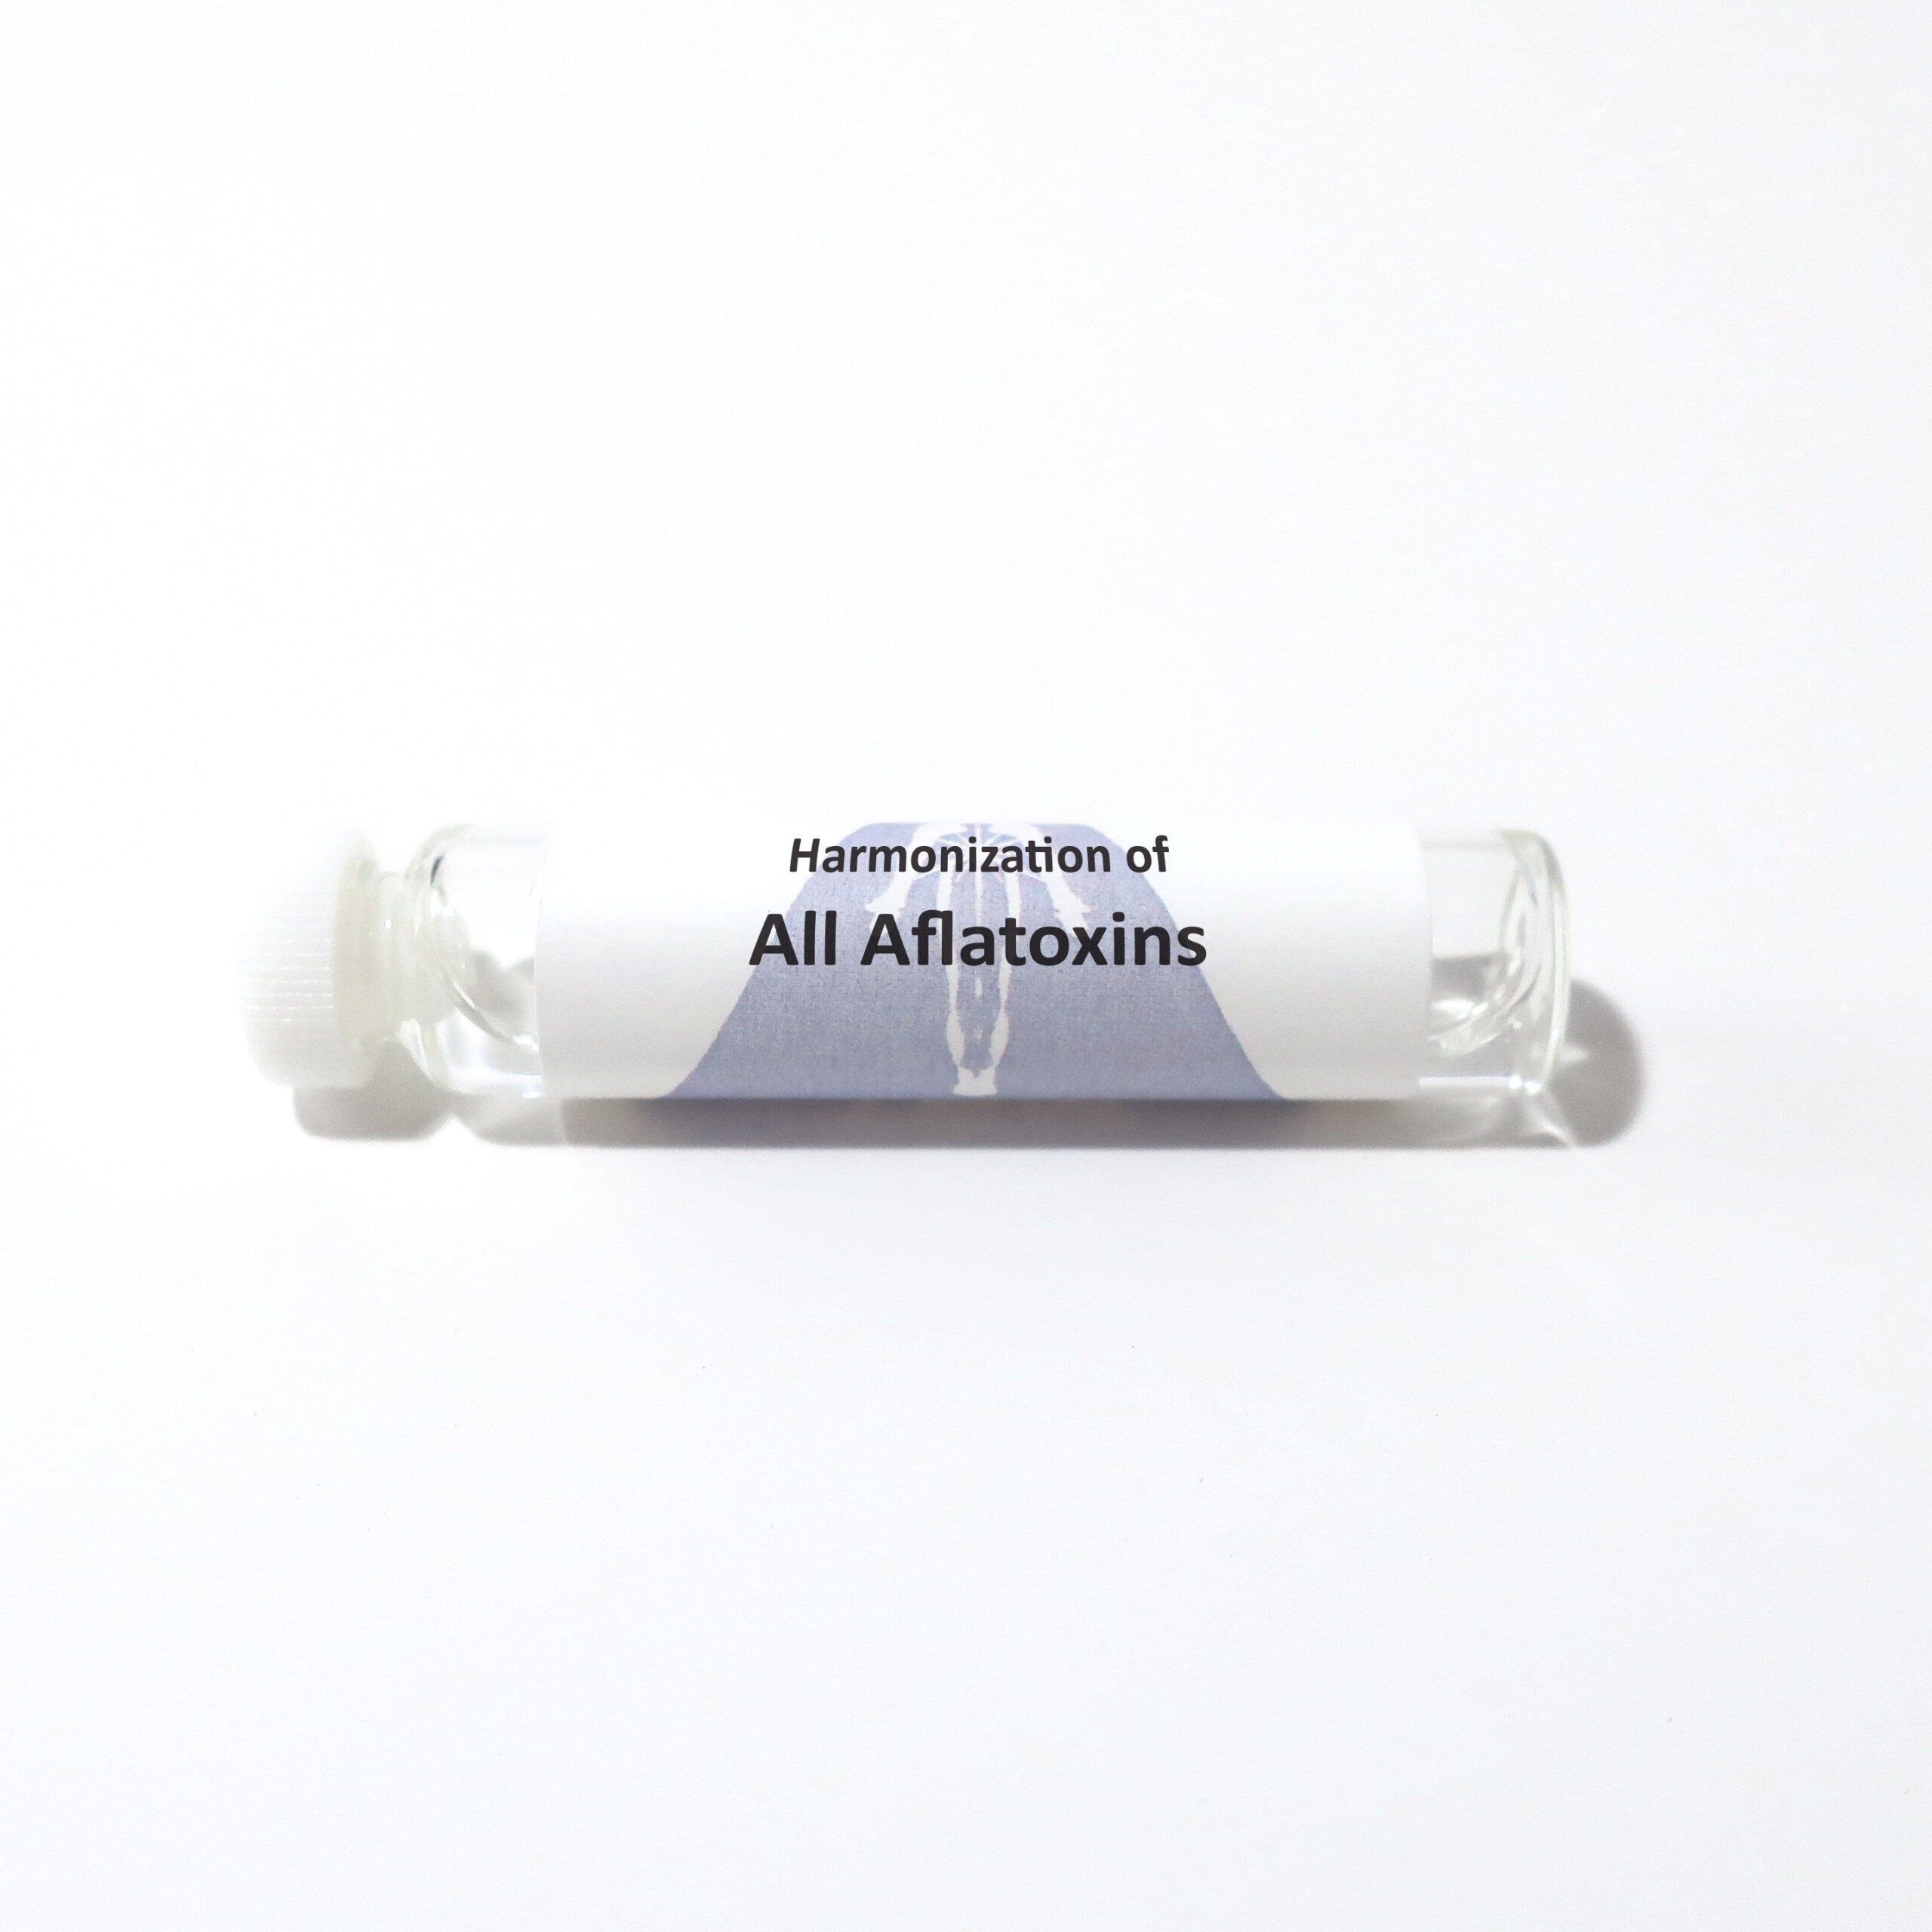 All Aflatoxins